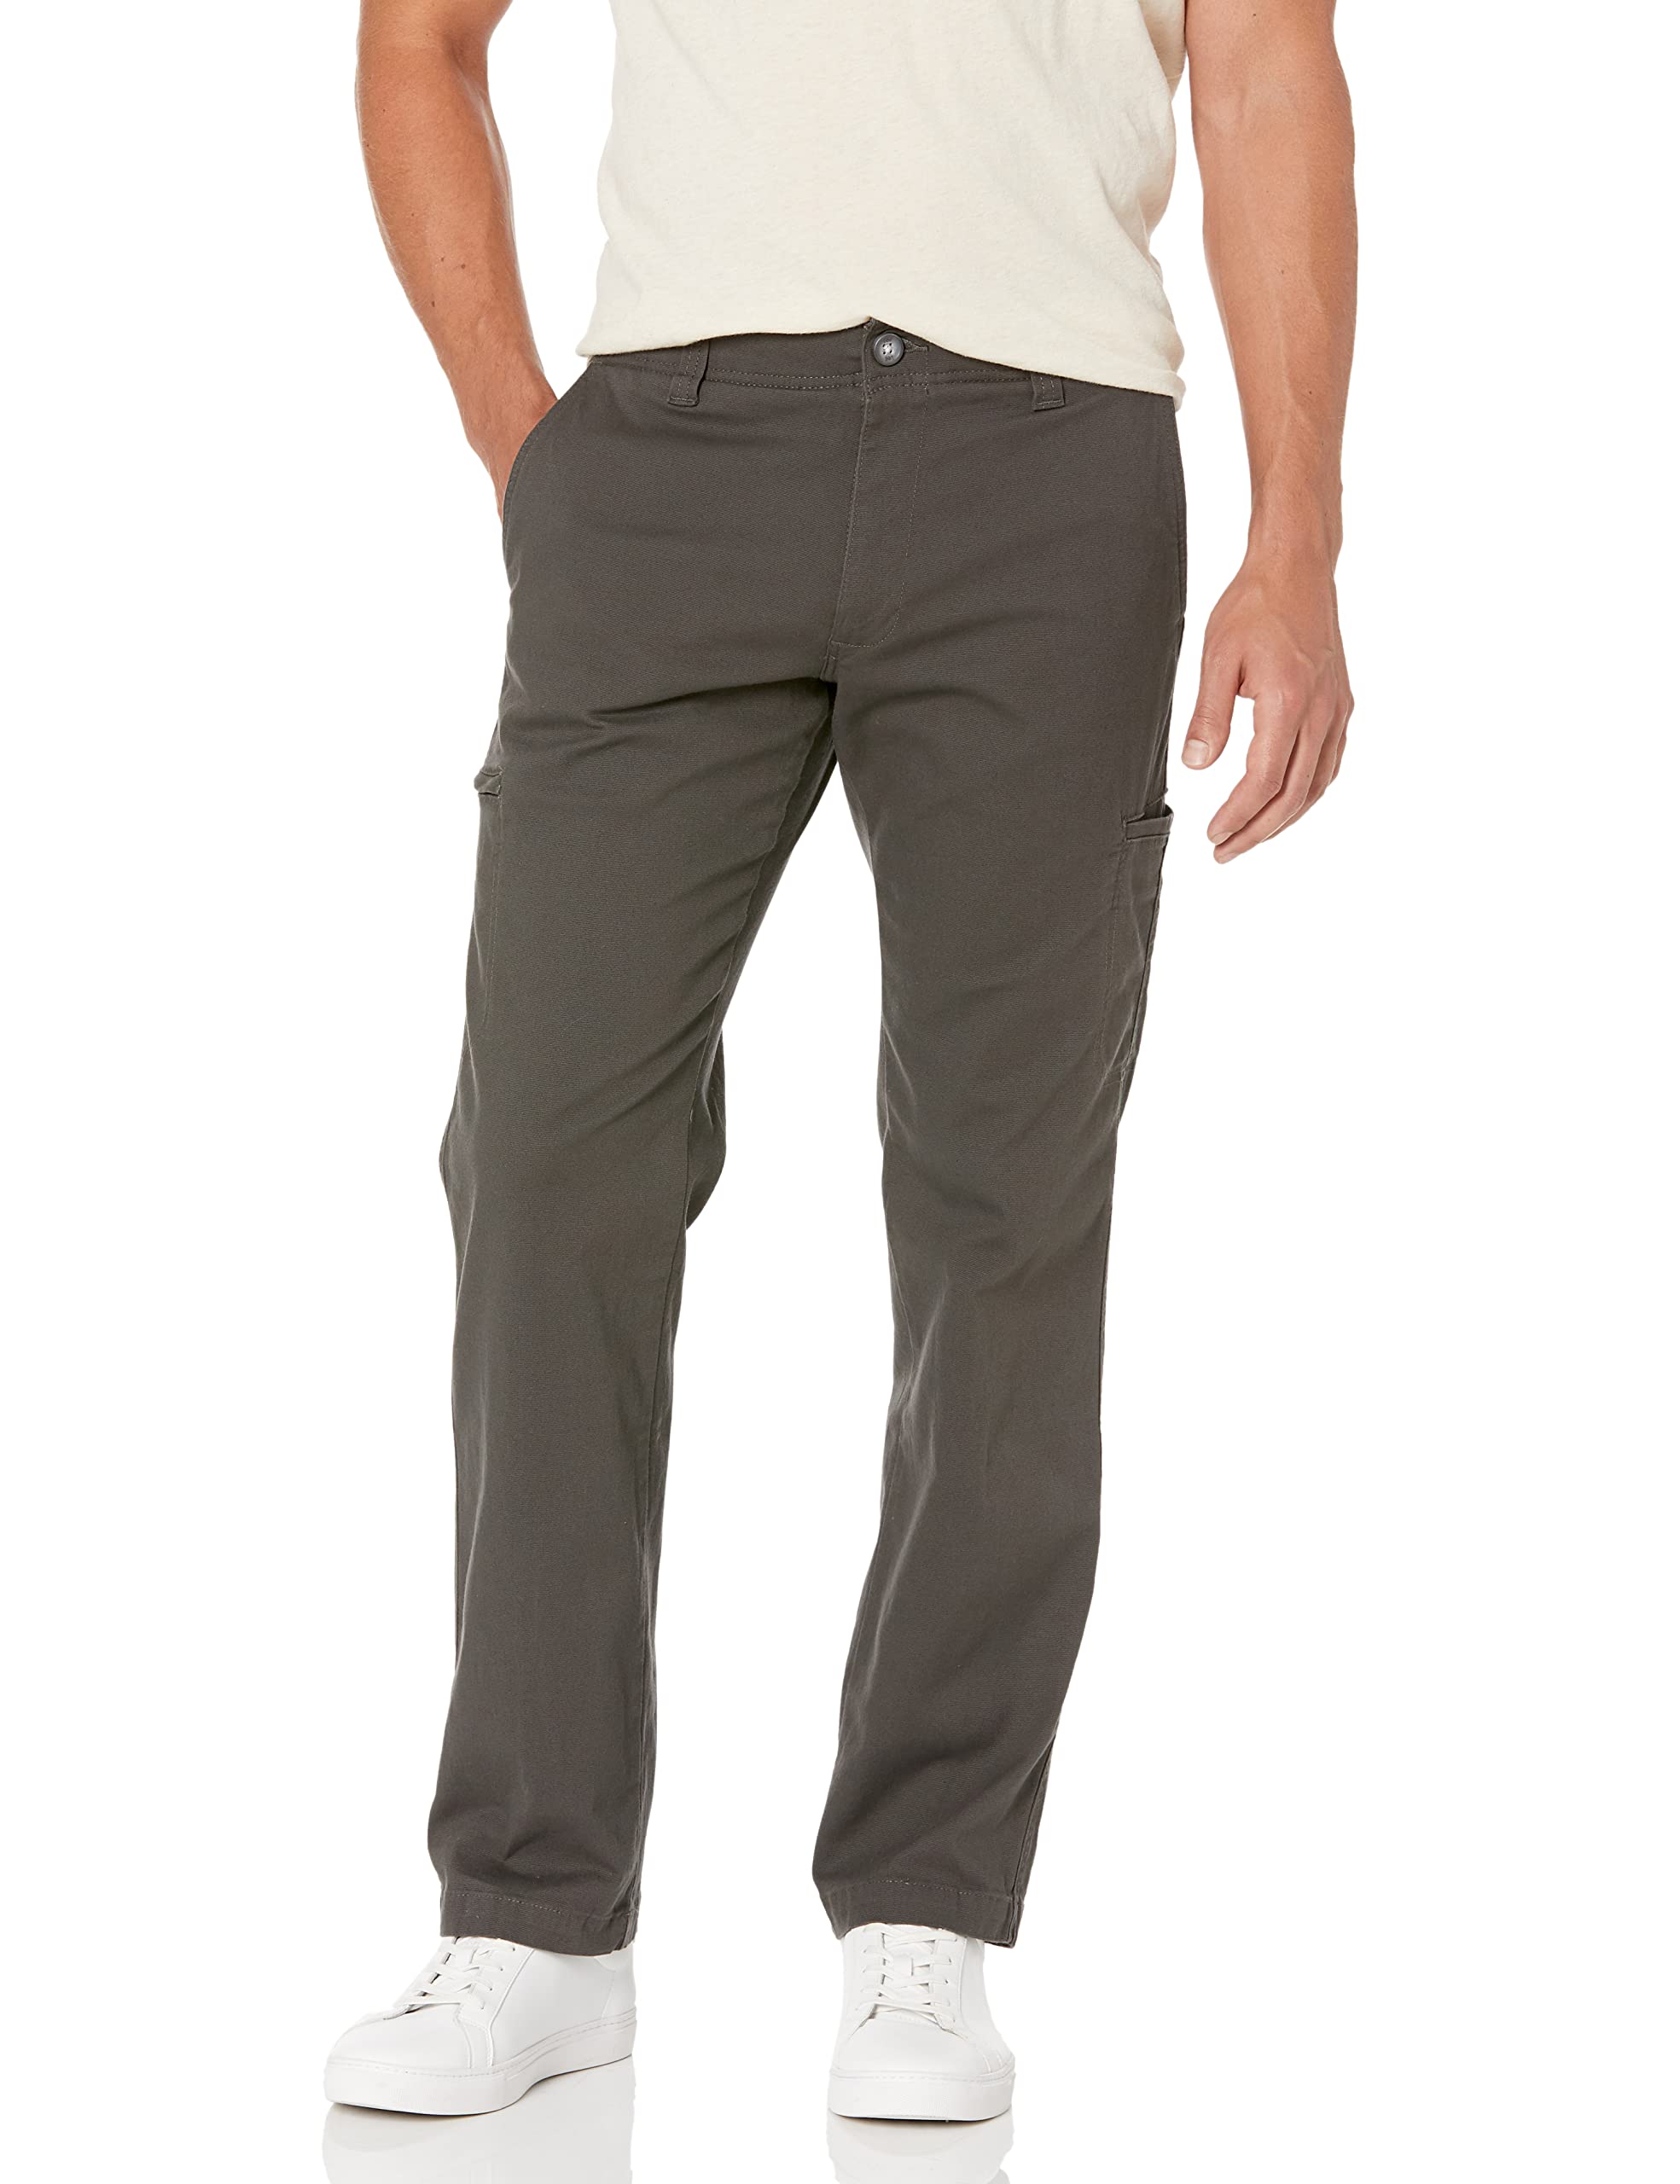 Mens Wrangler Comfort Solution Series Pants..Green..Pockets..Stretch 34 X  32 | eBay